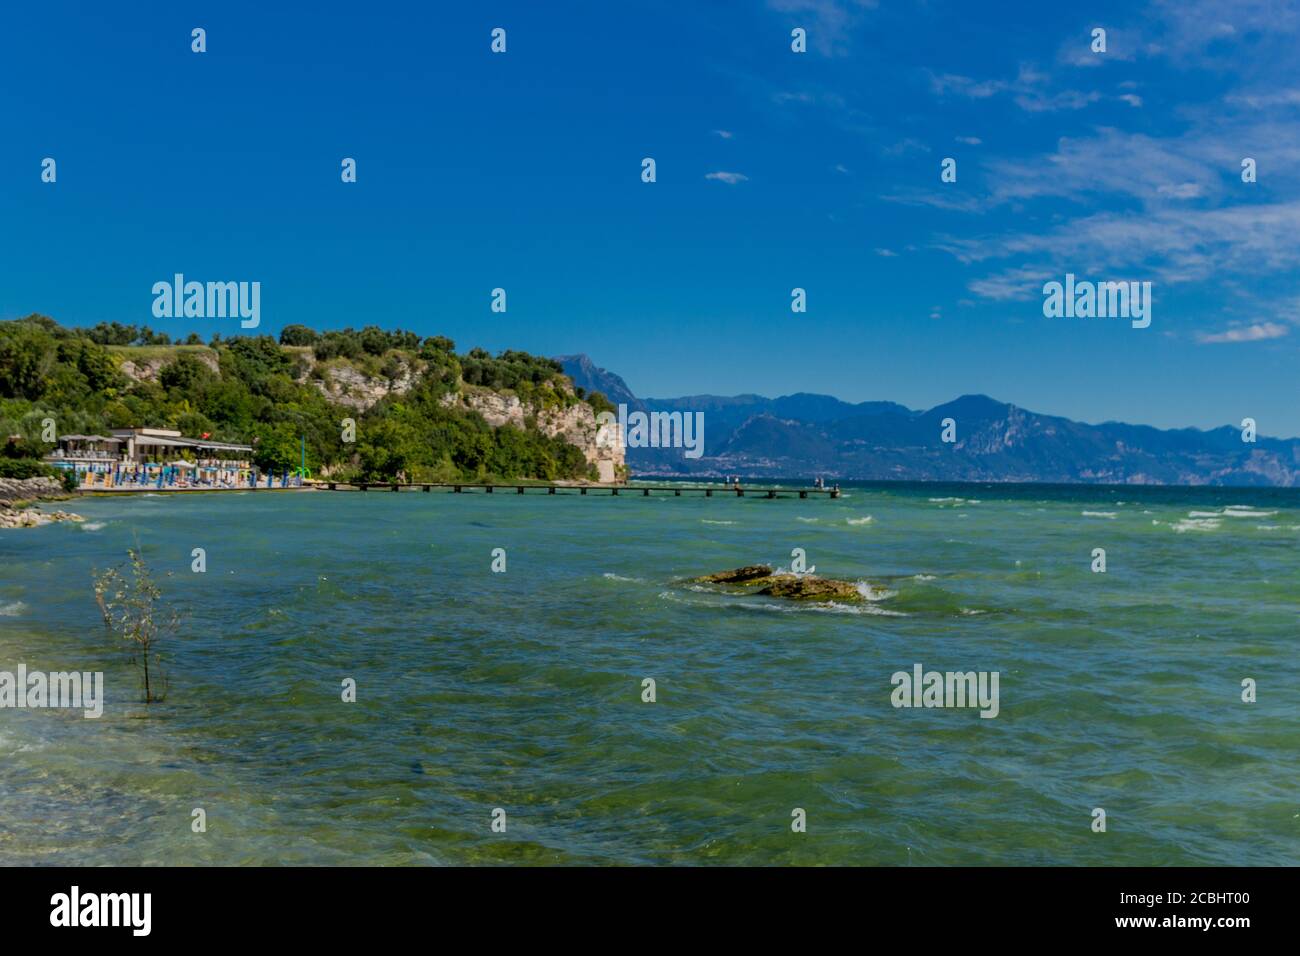 Holiday and Italian summer feeling along Lake Garda - Italy/Europe Stock Photo